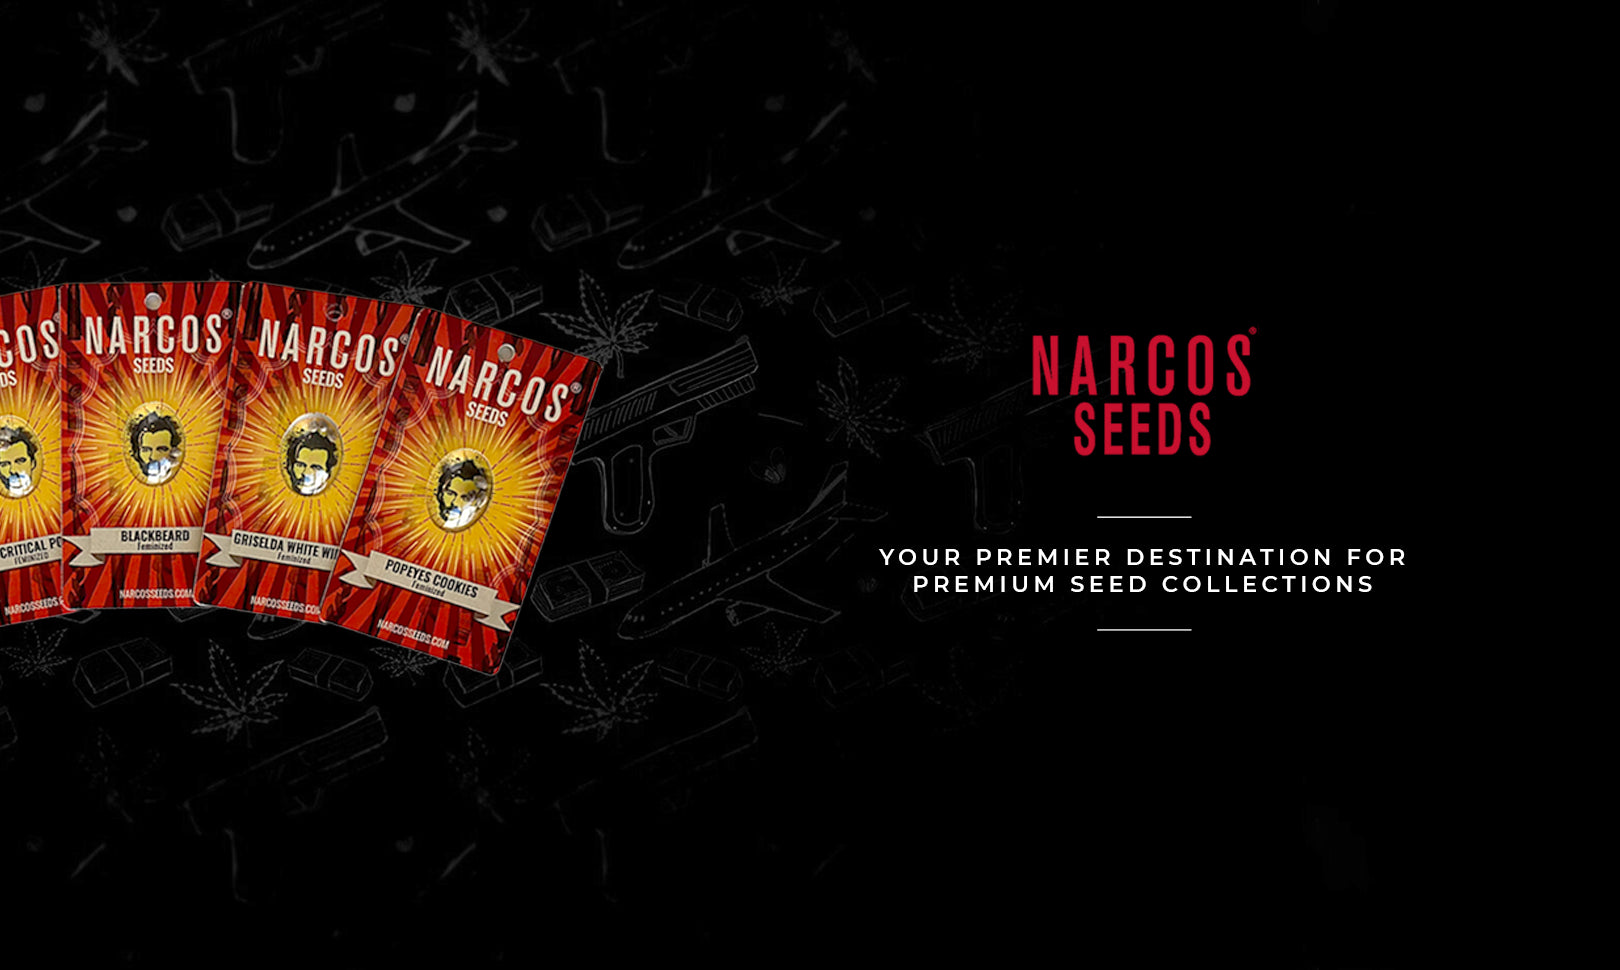 Narcos seeds premium